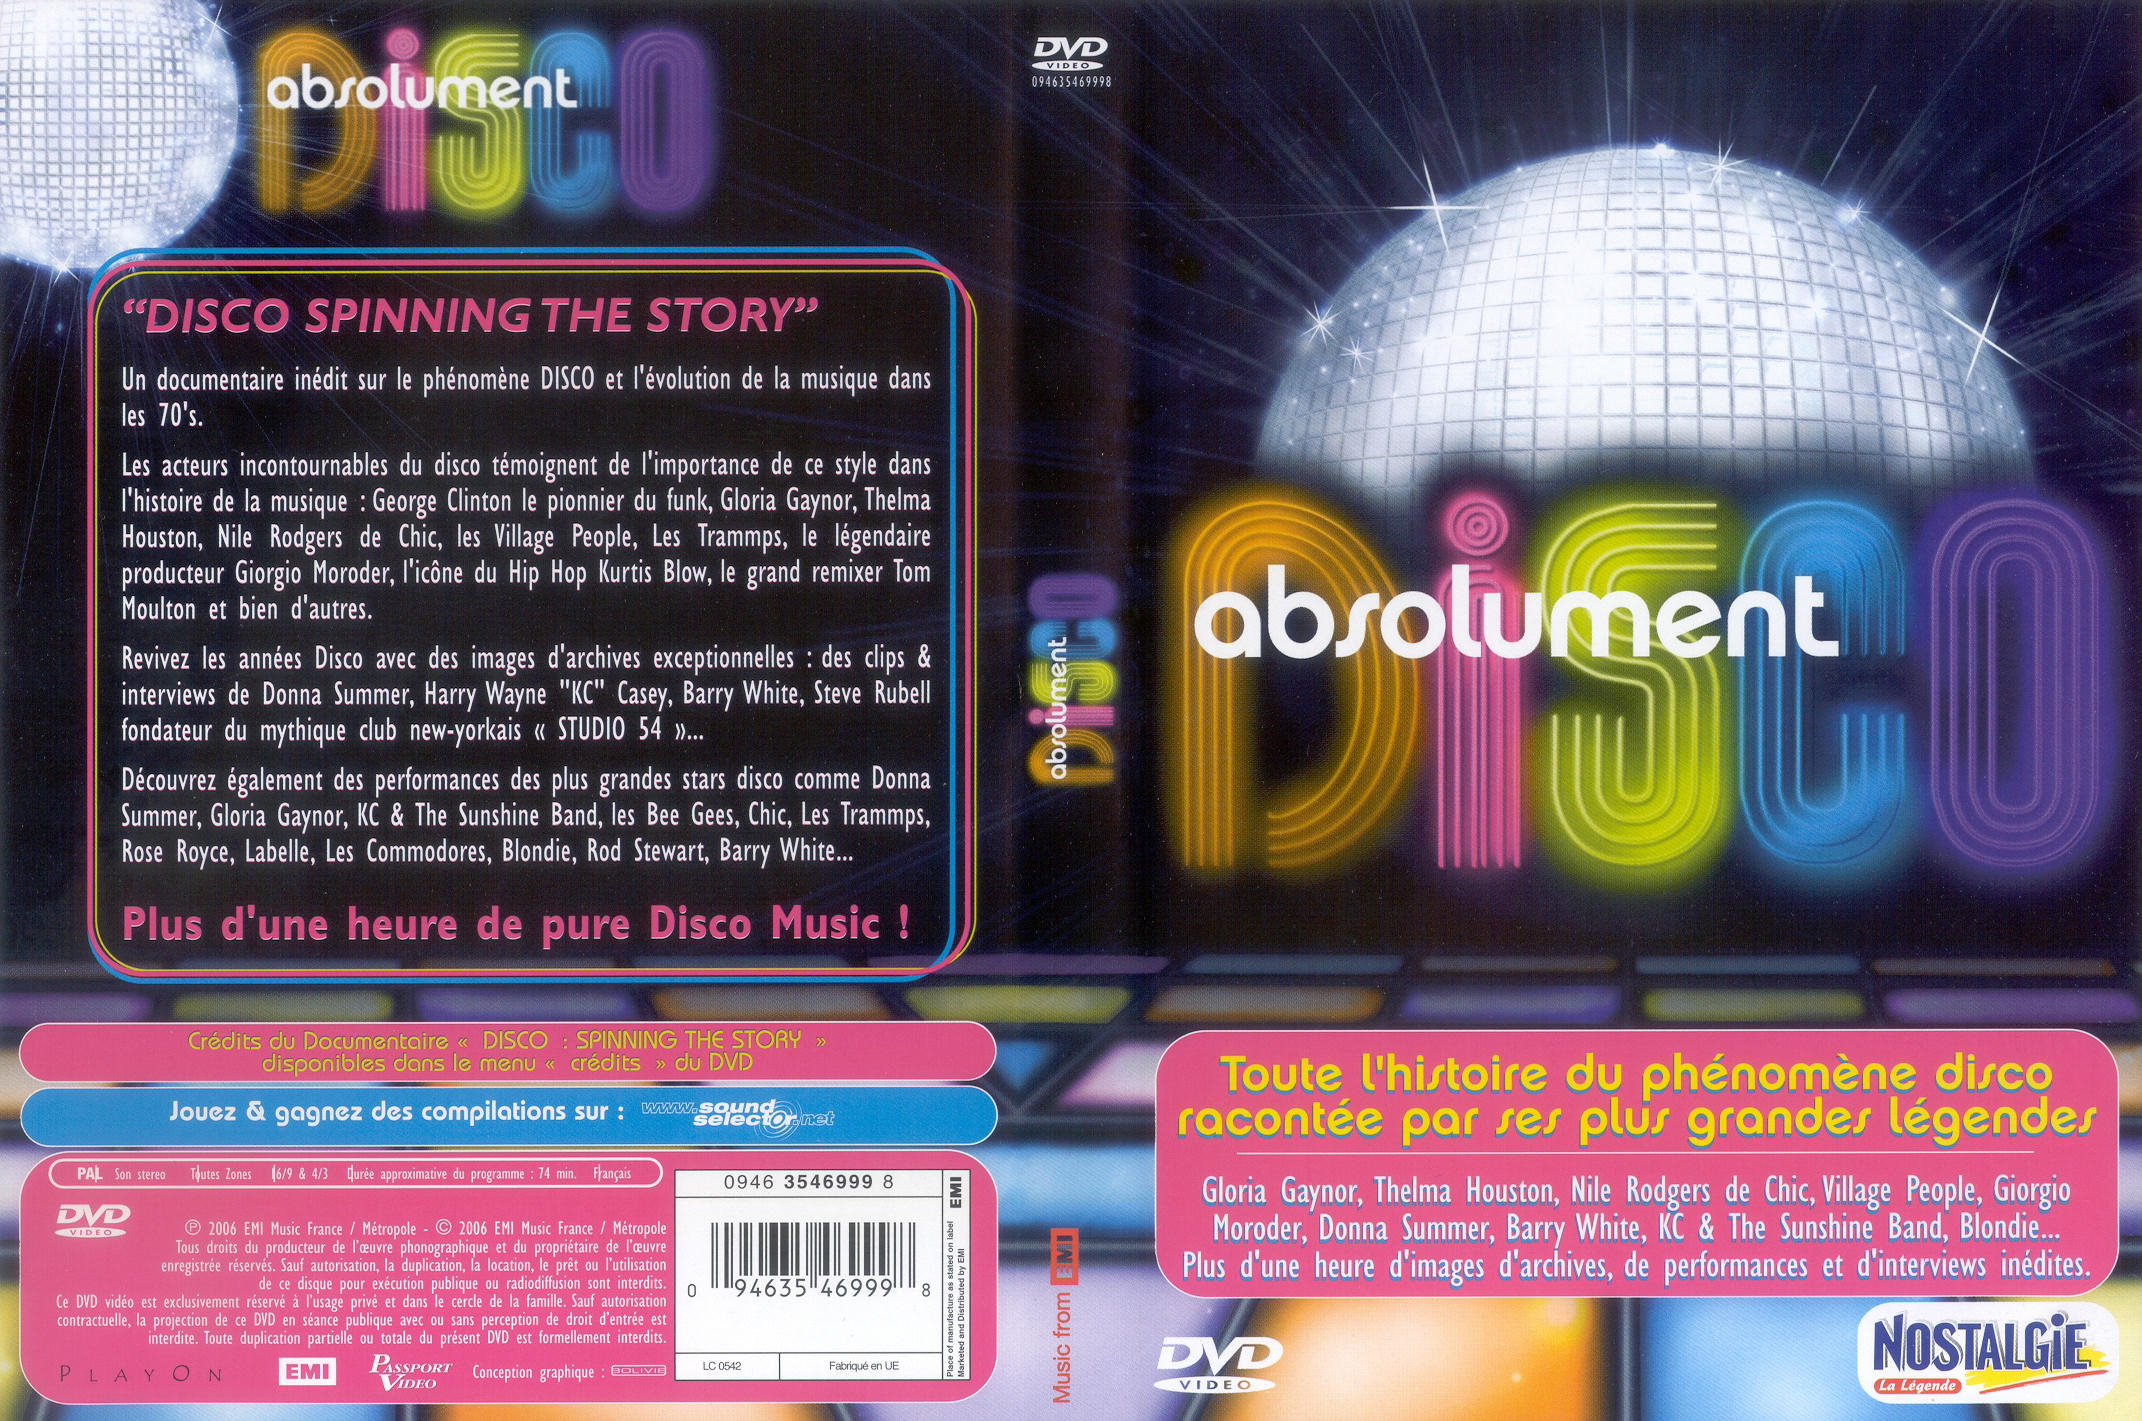 Jaquette DVD Absolument Disco